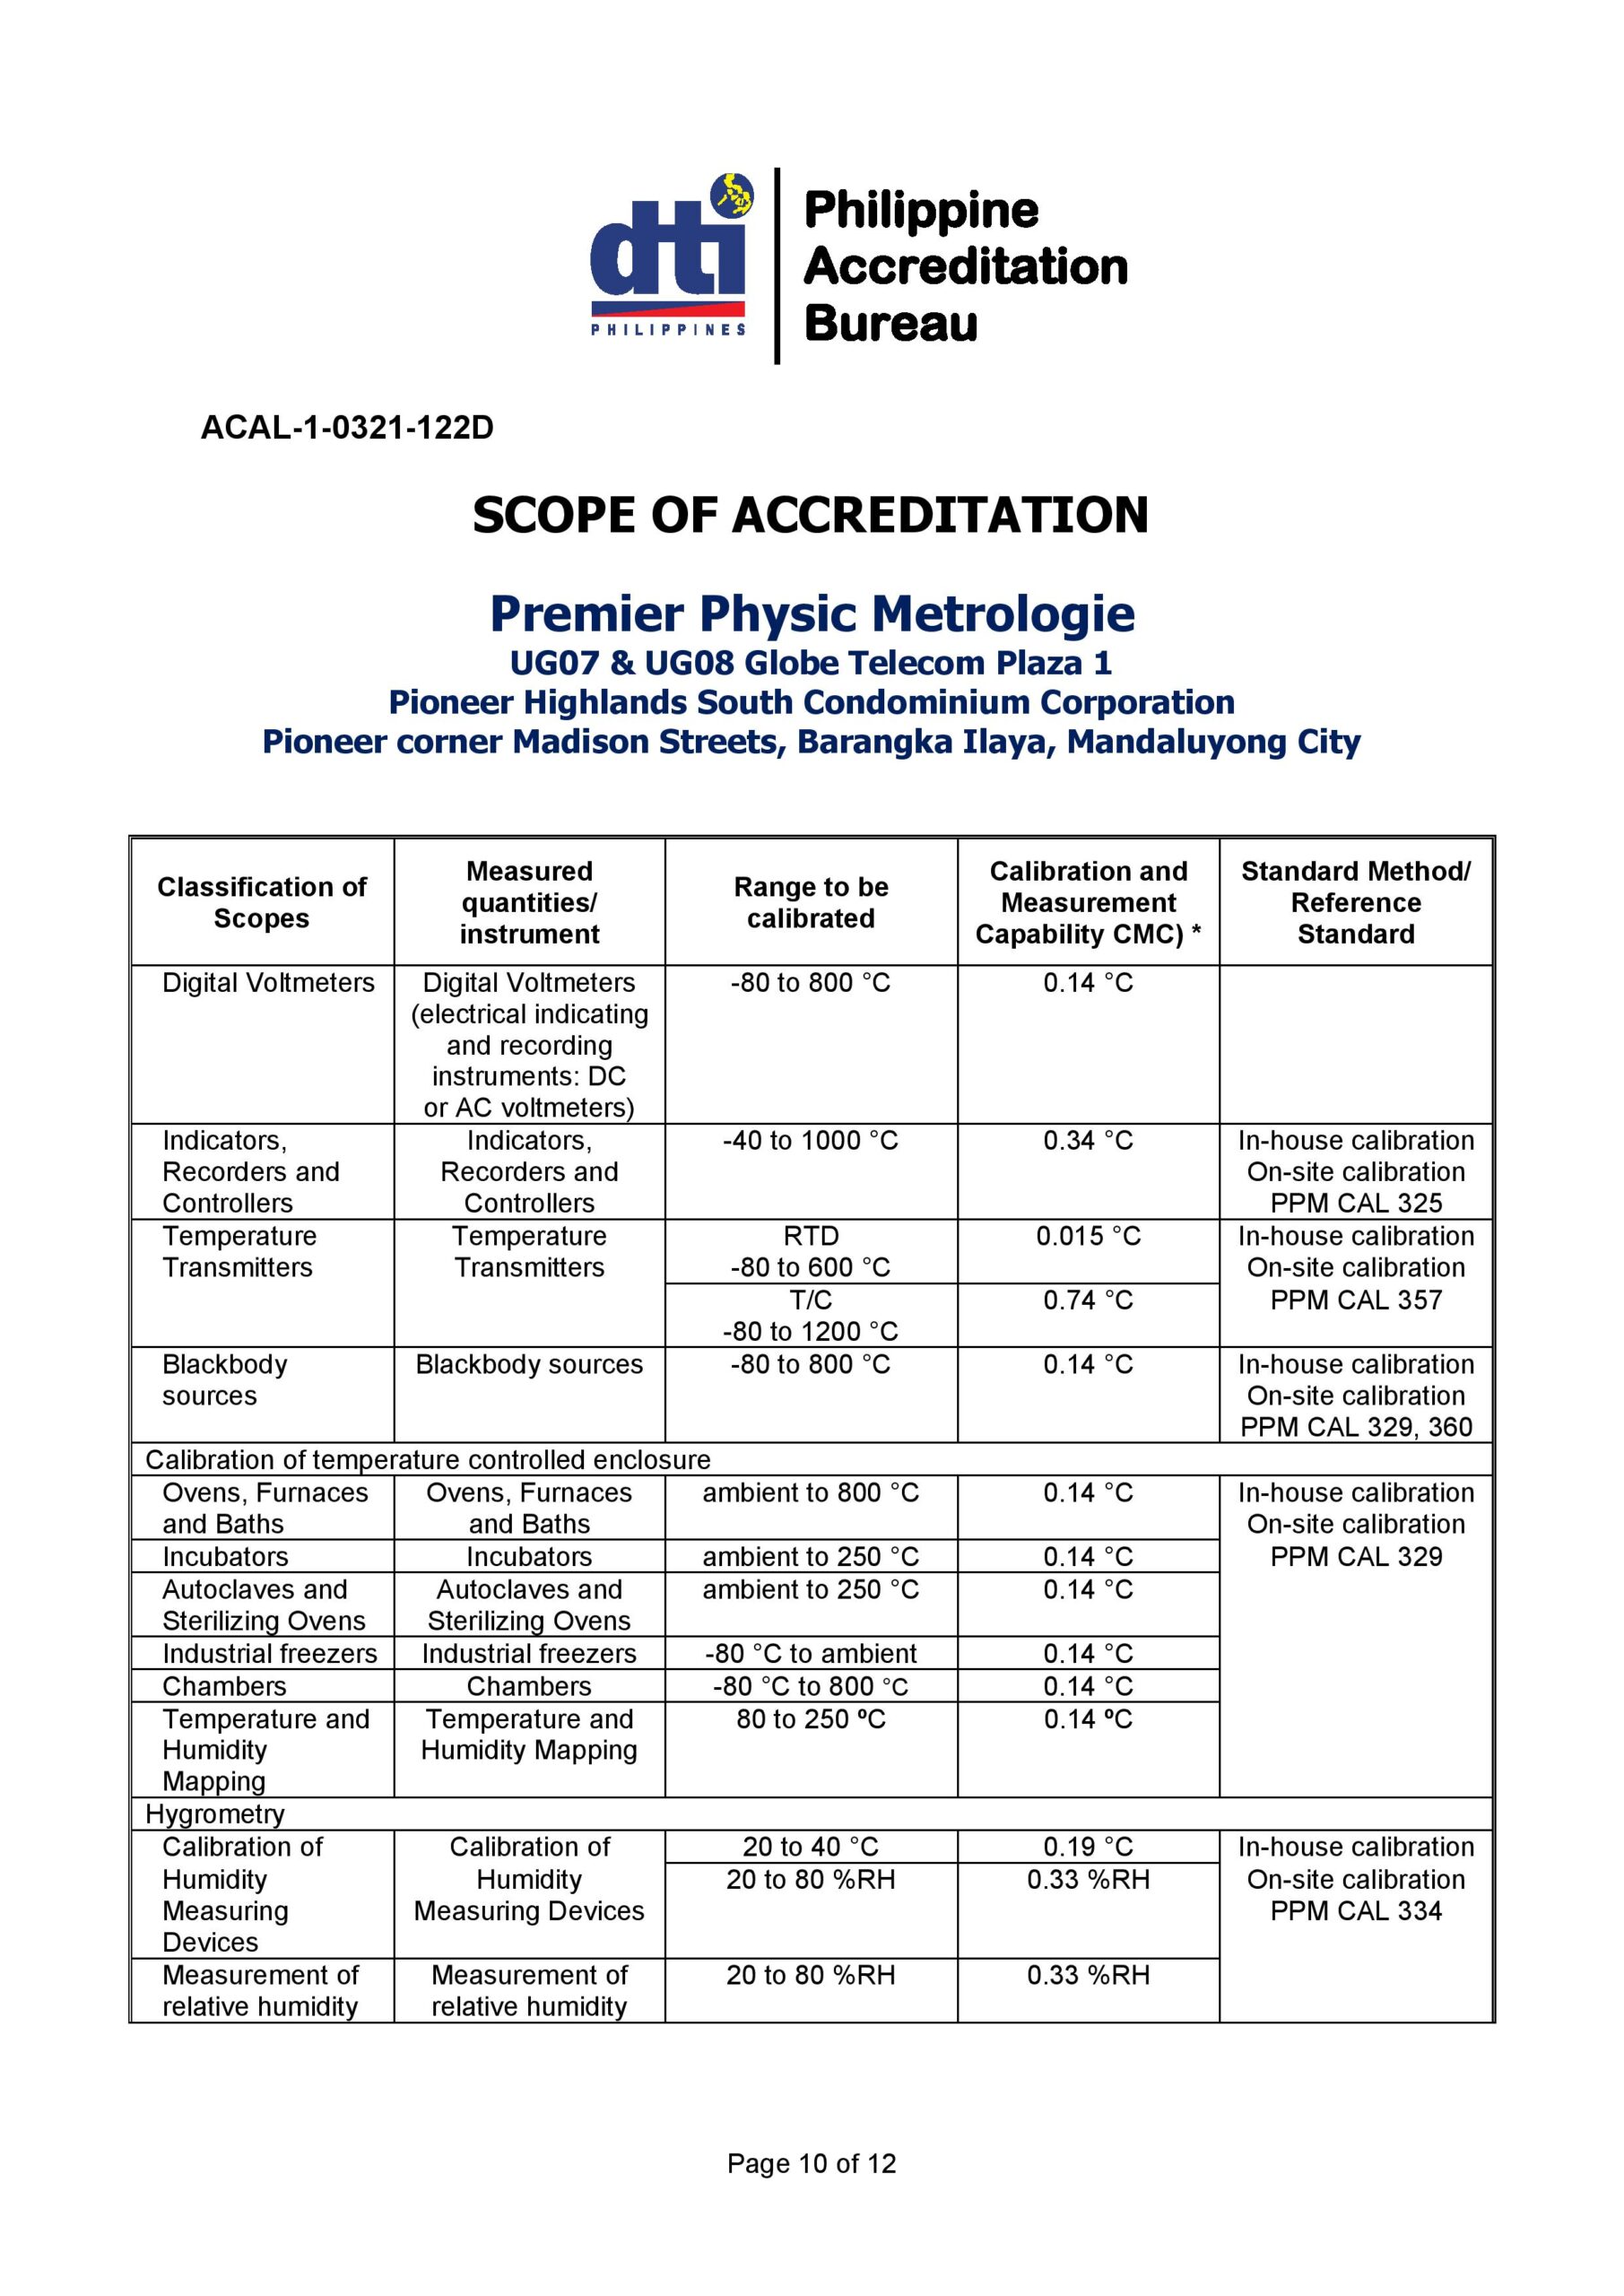 Premier Physic Metrologie - Scope of Accreditation 10